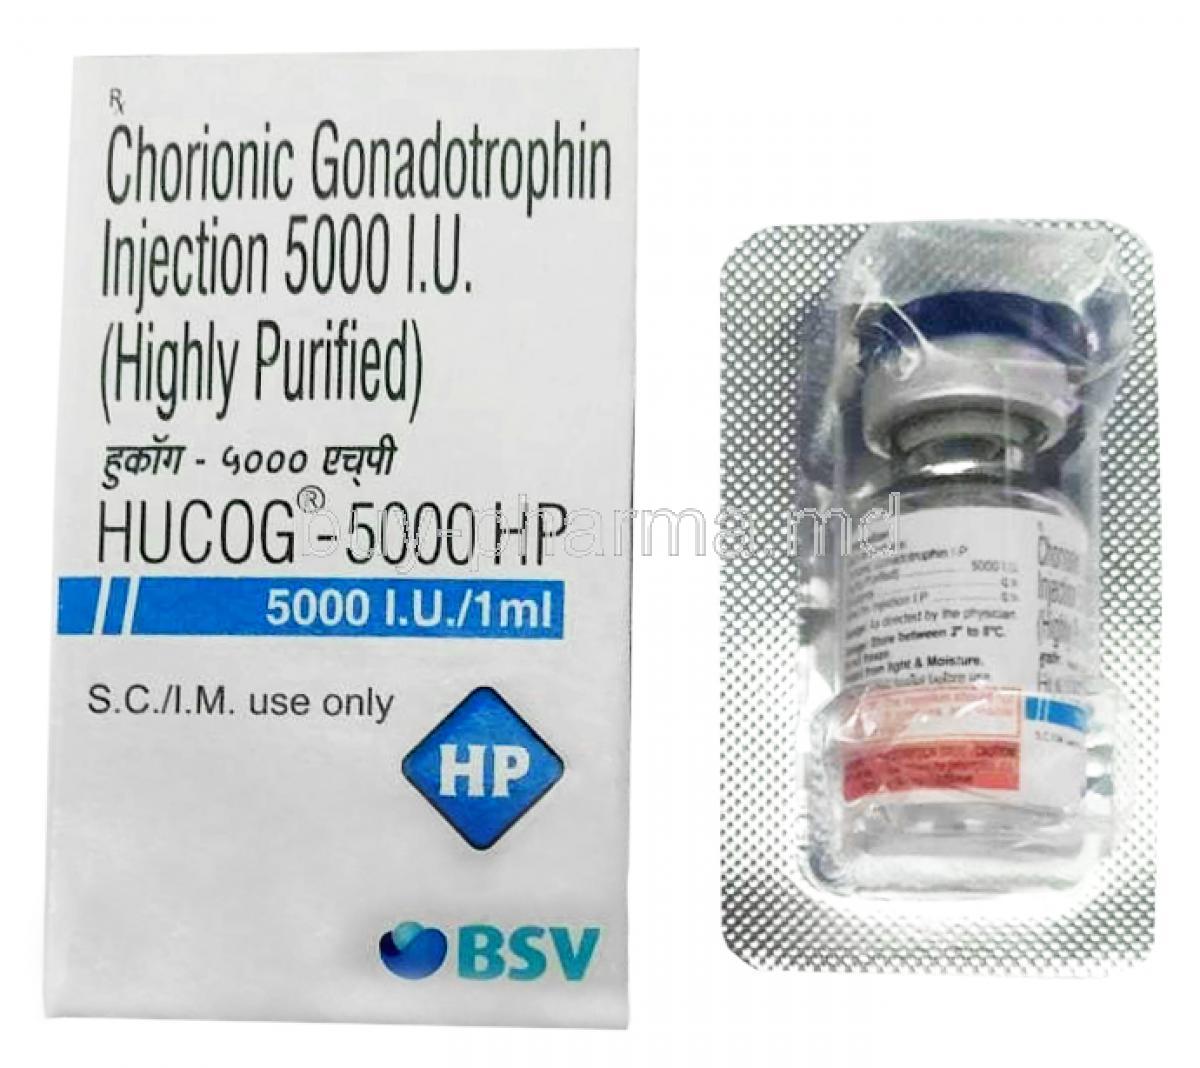 HUCOG HP Injection,Human chorionic gonadotropin (hCG) 5000IU, Injection vial 1mL, Bharat Serums and Vaccines Ltd, Box, Bottle